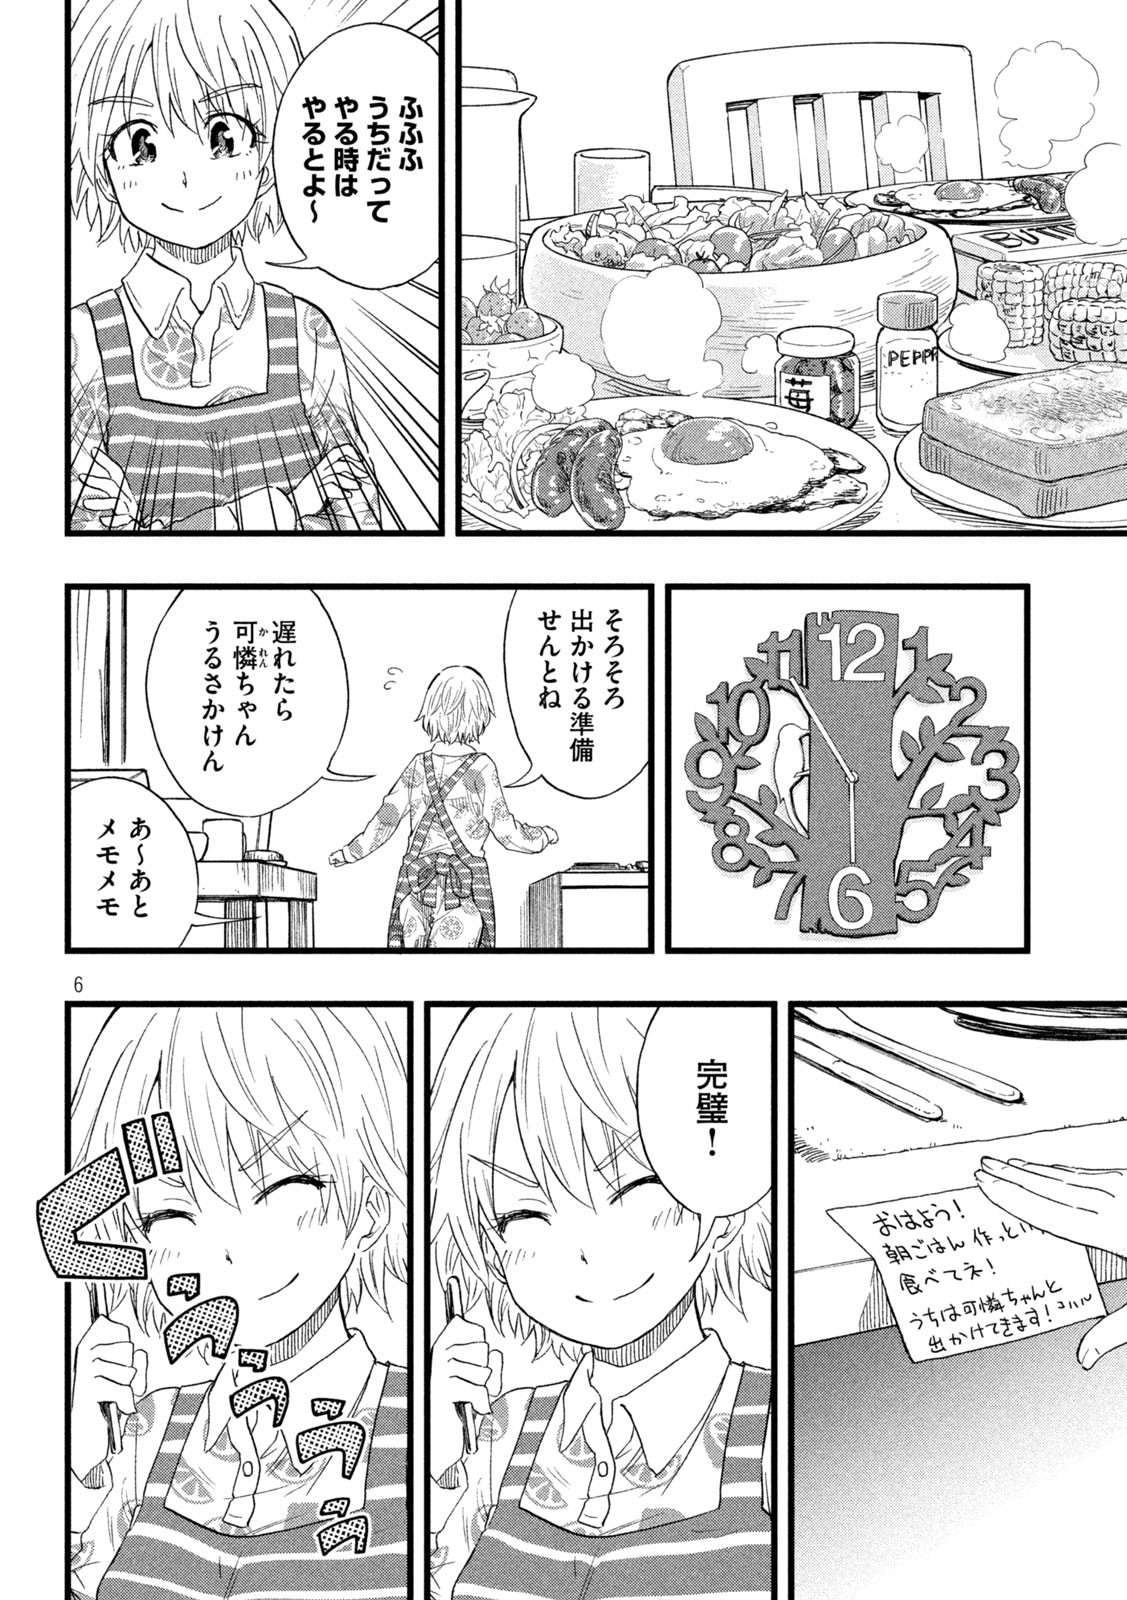 Koharu haru! - Chapter 76 - Page 2